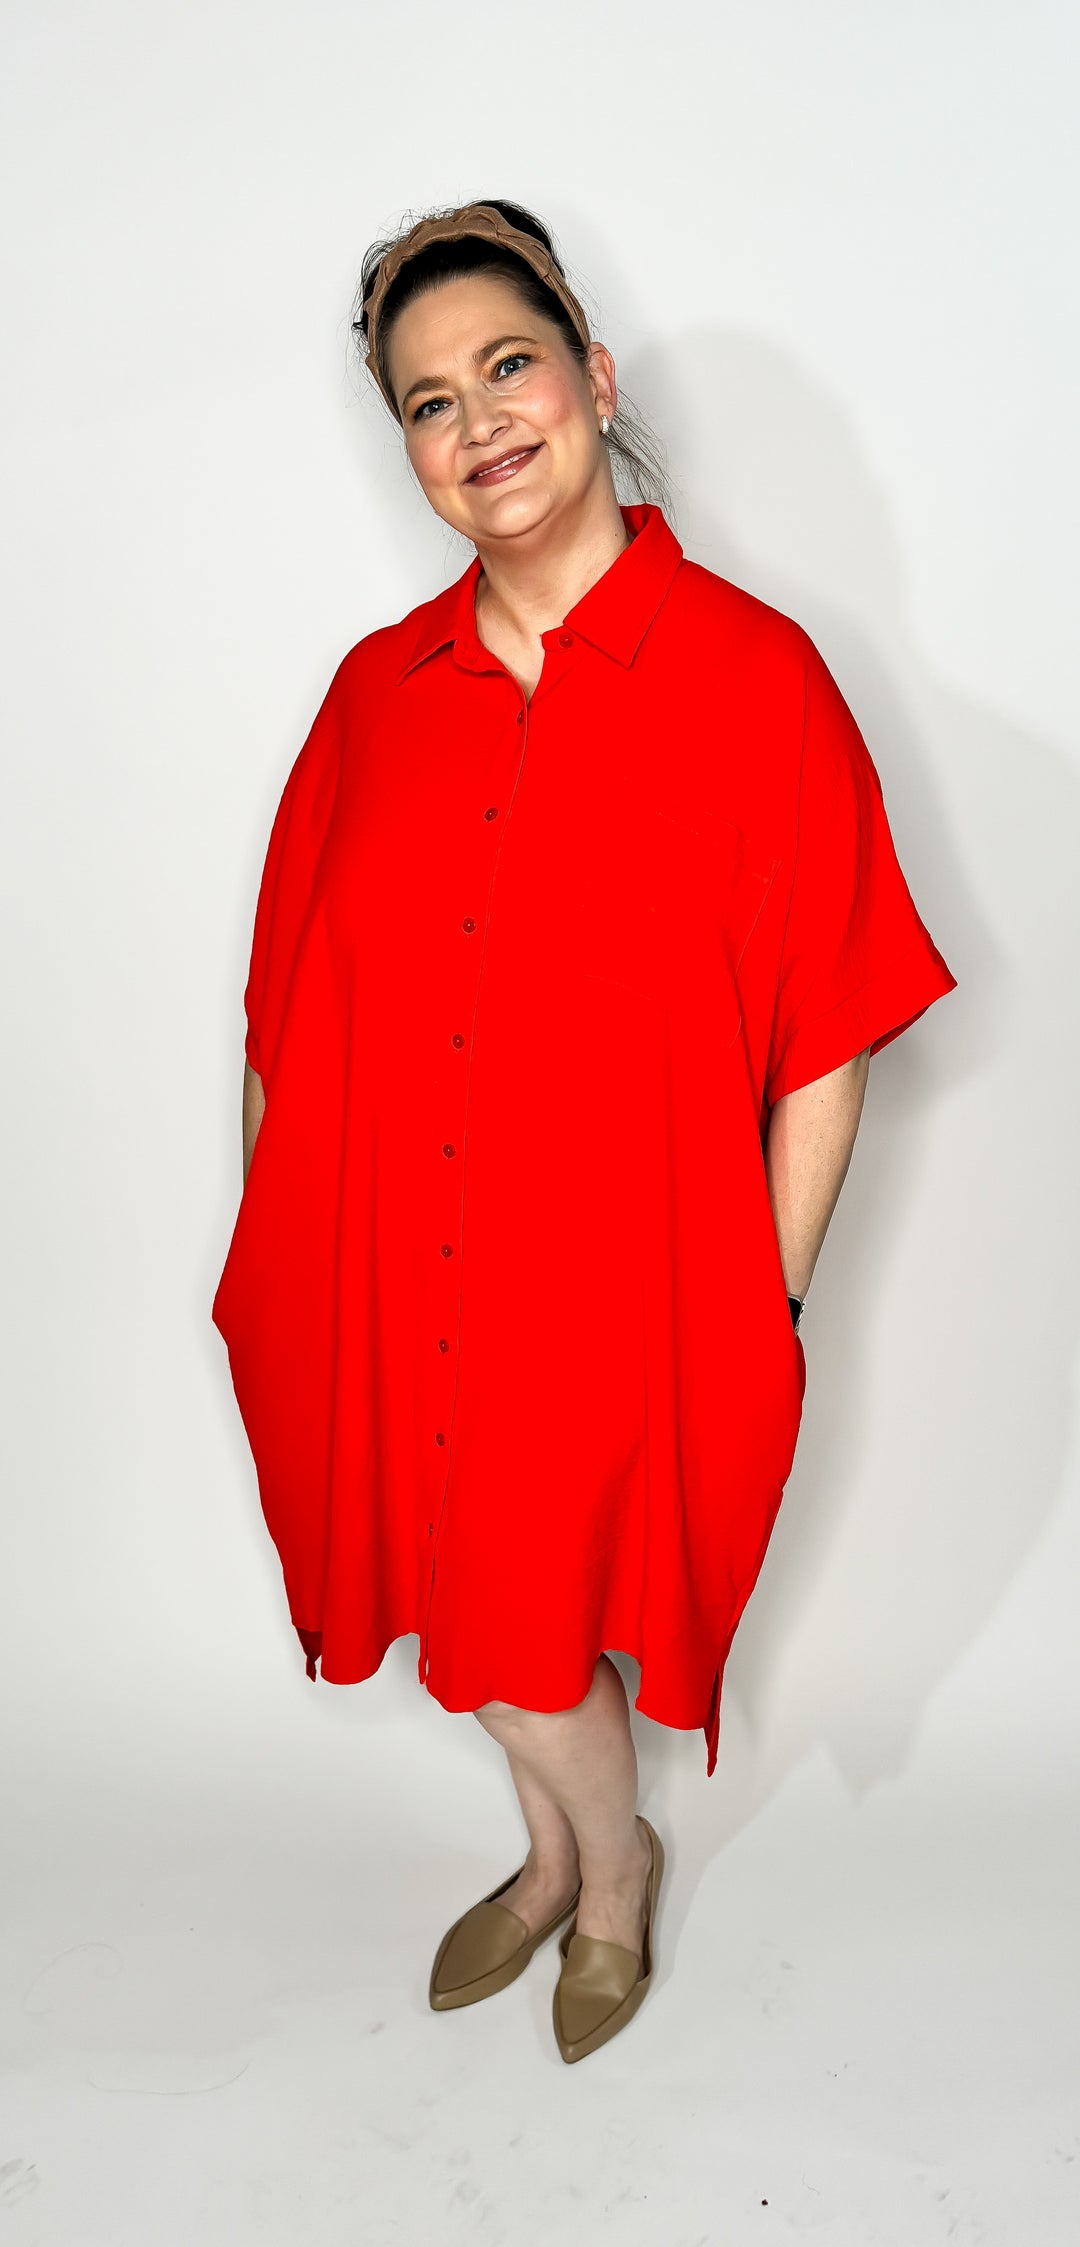 Tomato Red Shirt Dress